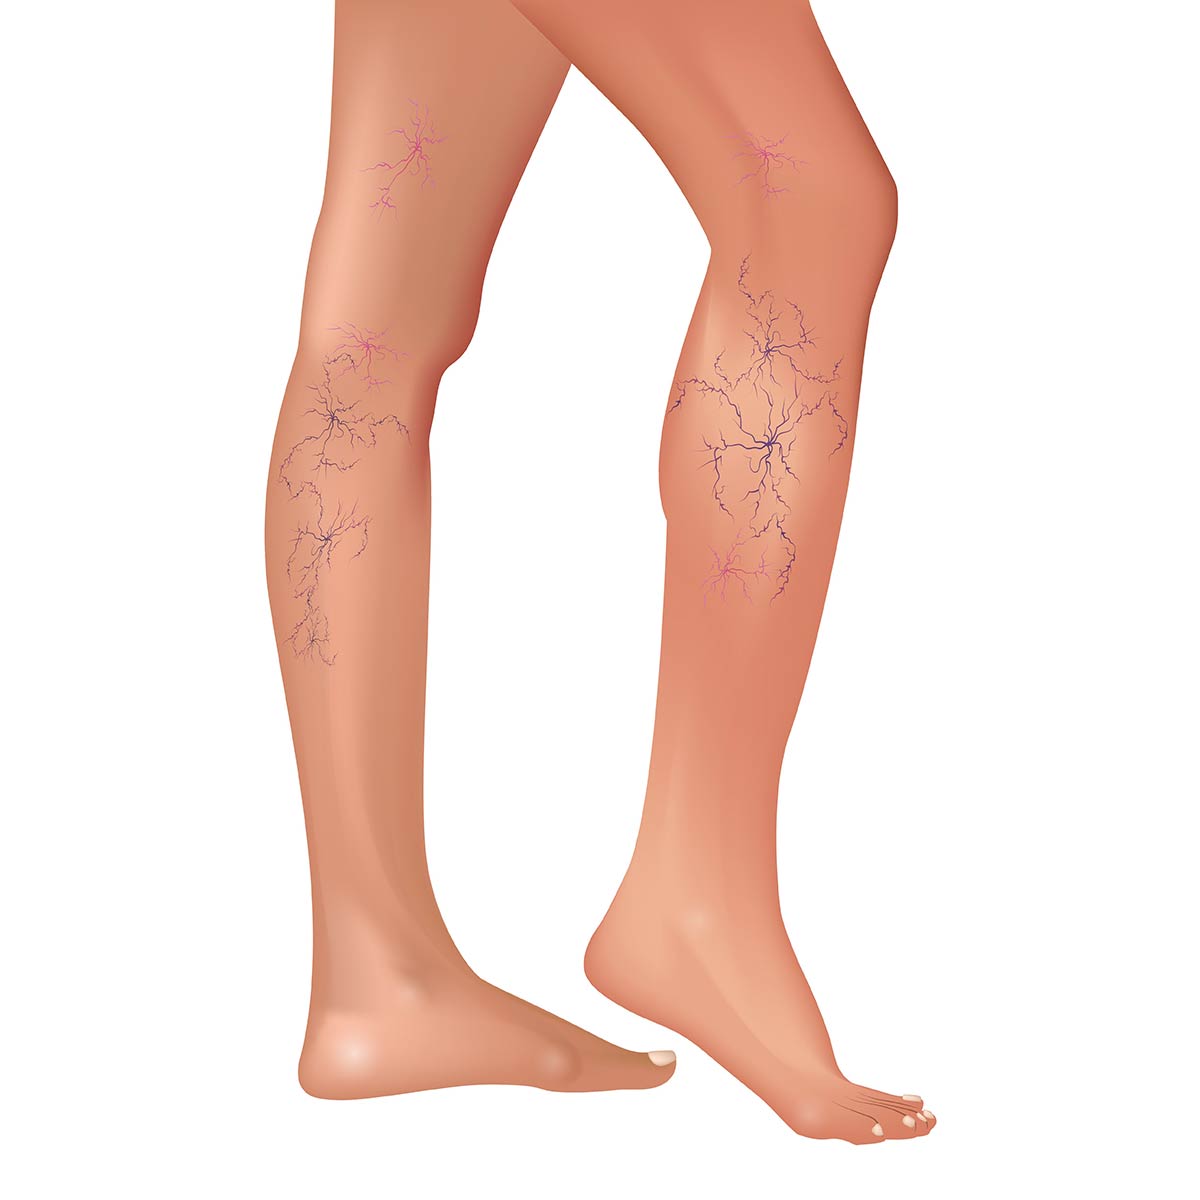 apair of bare legs showing varicose veins